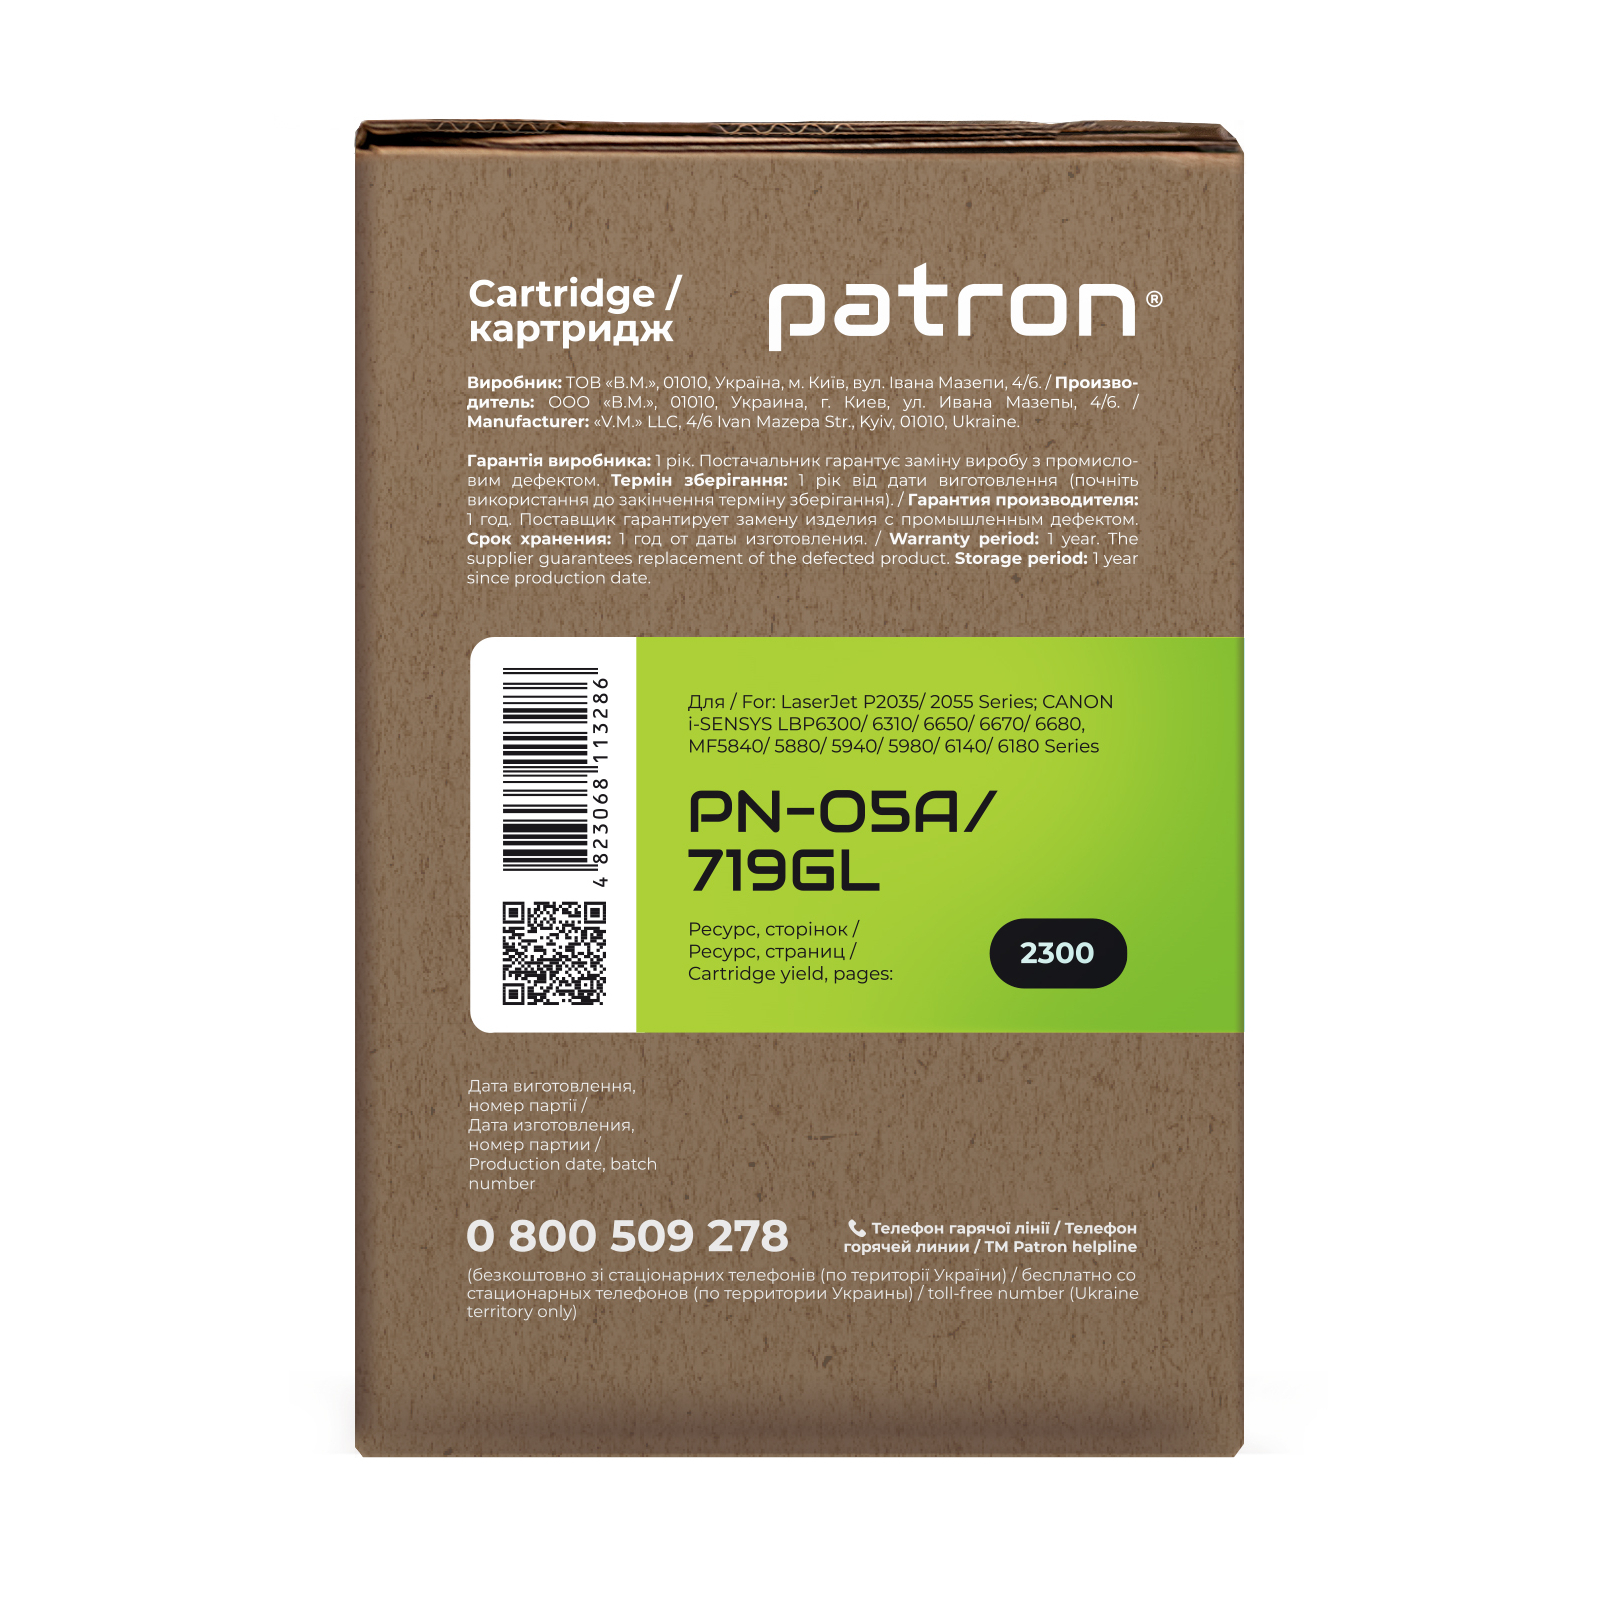 Картридж Patron HP LJP2055 (CE505A) CANON719 GREEN Label (PN-05A/719GL) изображение 3